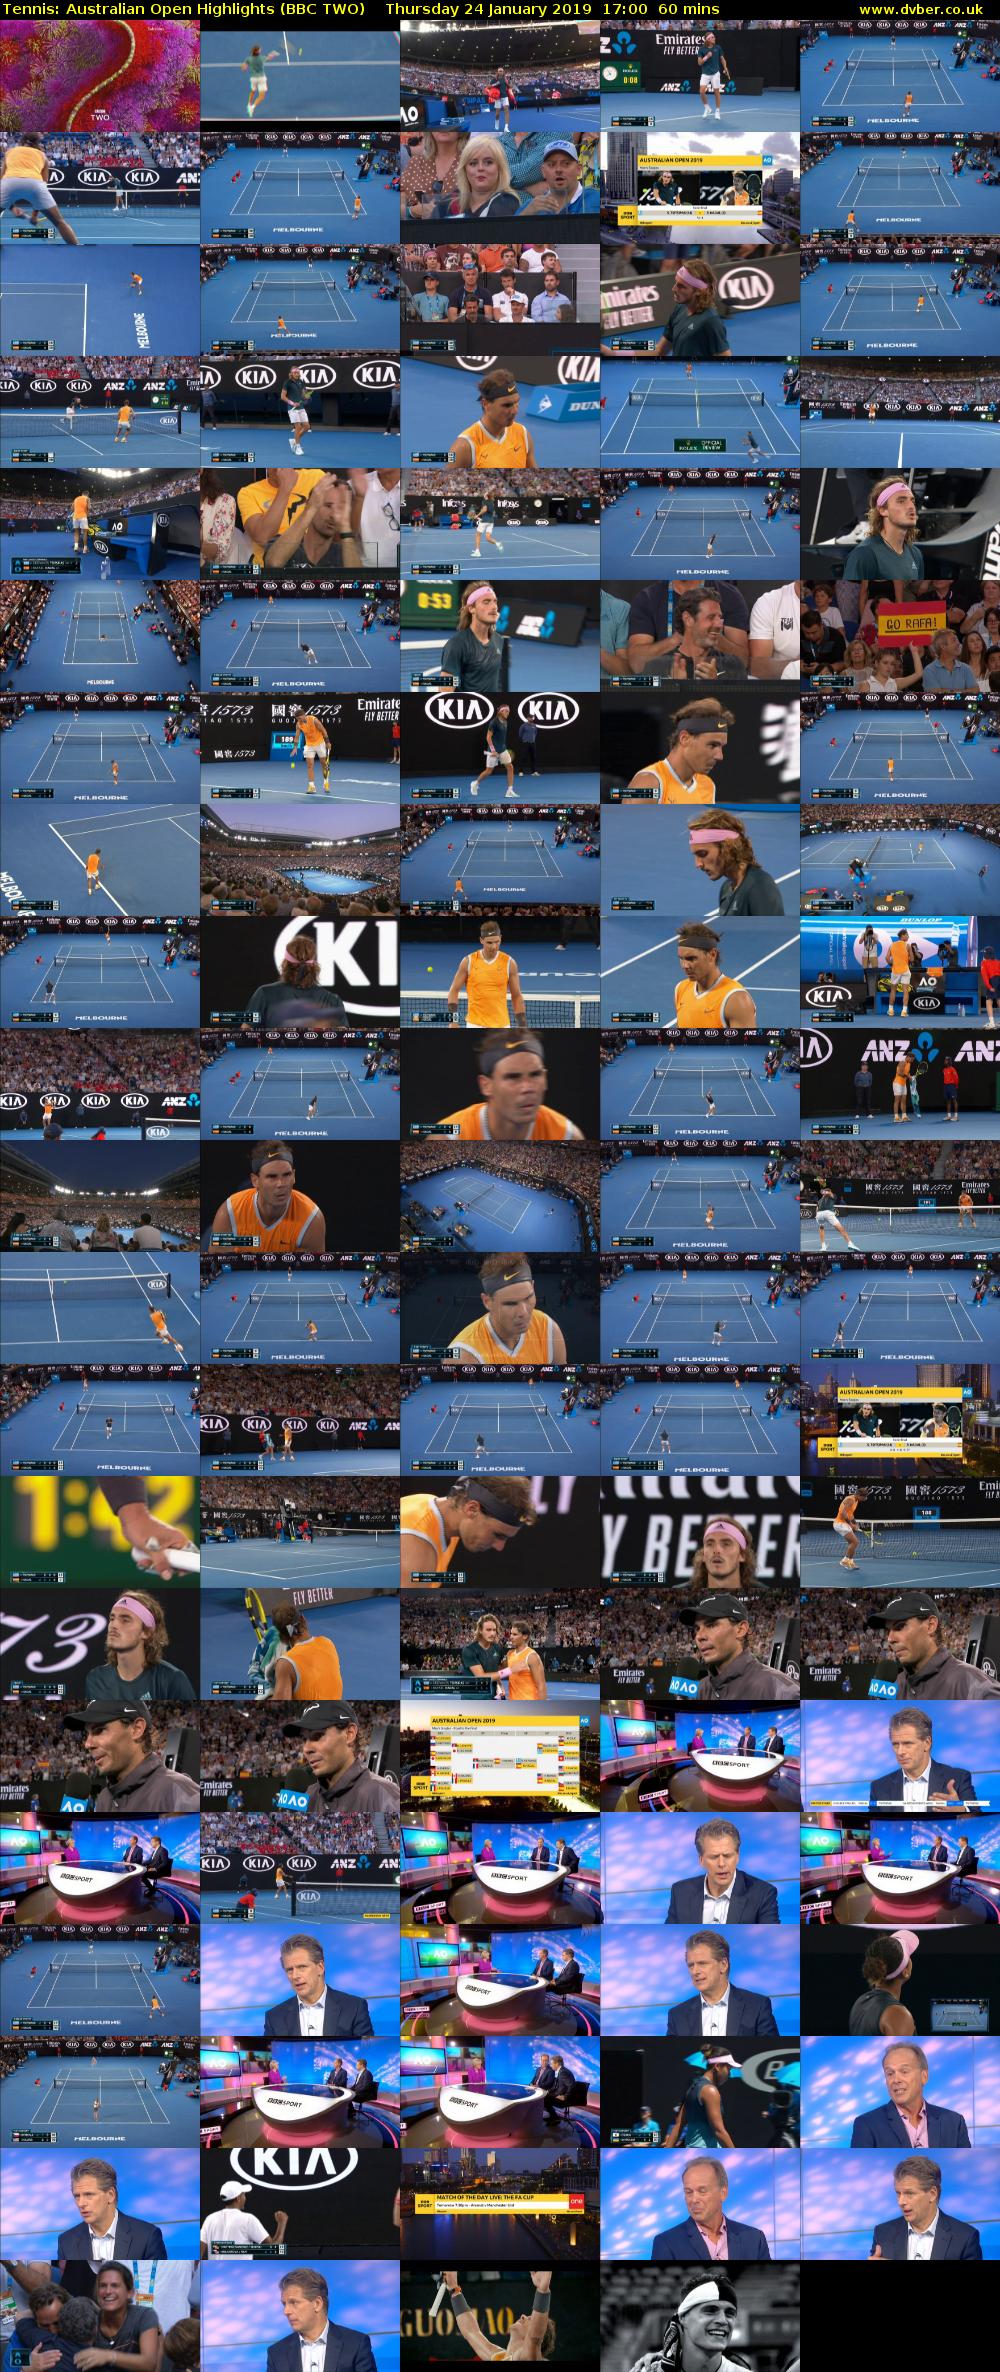 Tennis: Australian Open Highlights (BBC TWO) Thursday 24 January 2019 17:00 - 18:00